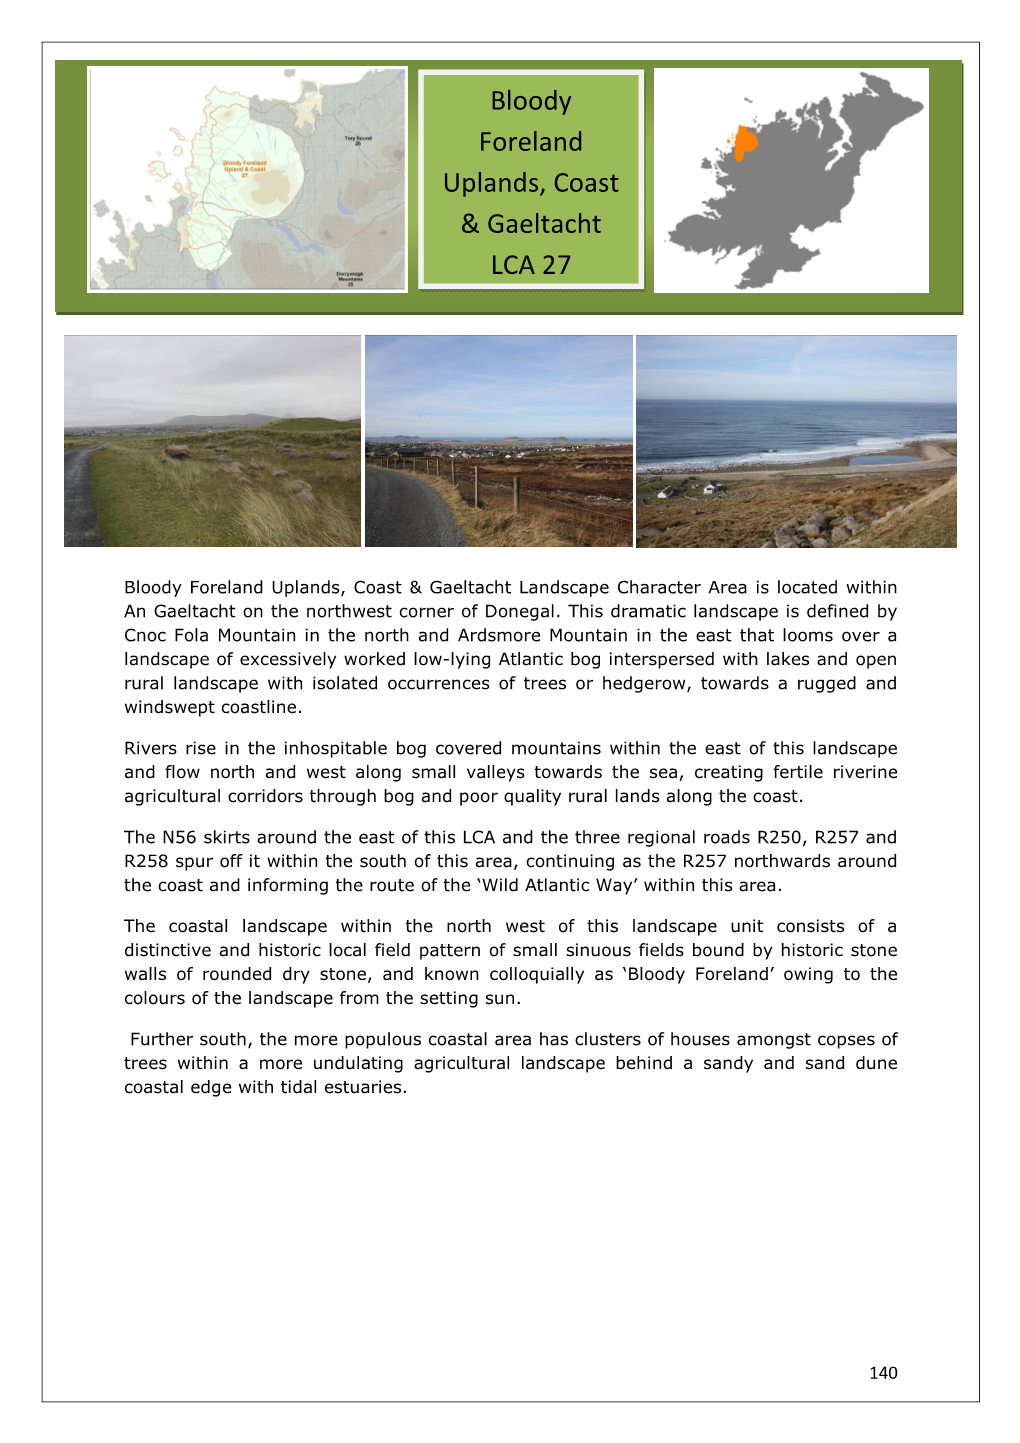 LCA 27 Bloody Foreland Uplands, Coast & Gaeltacht